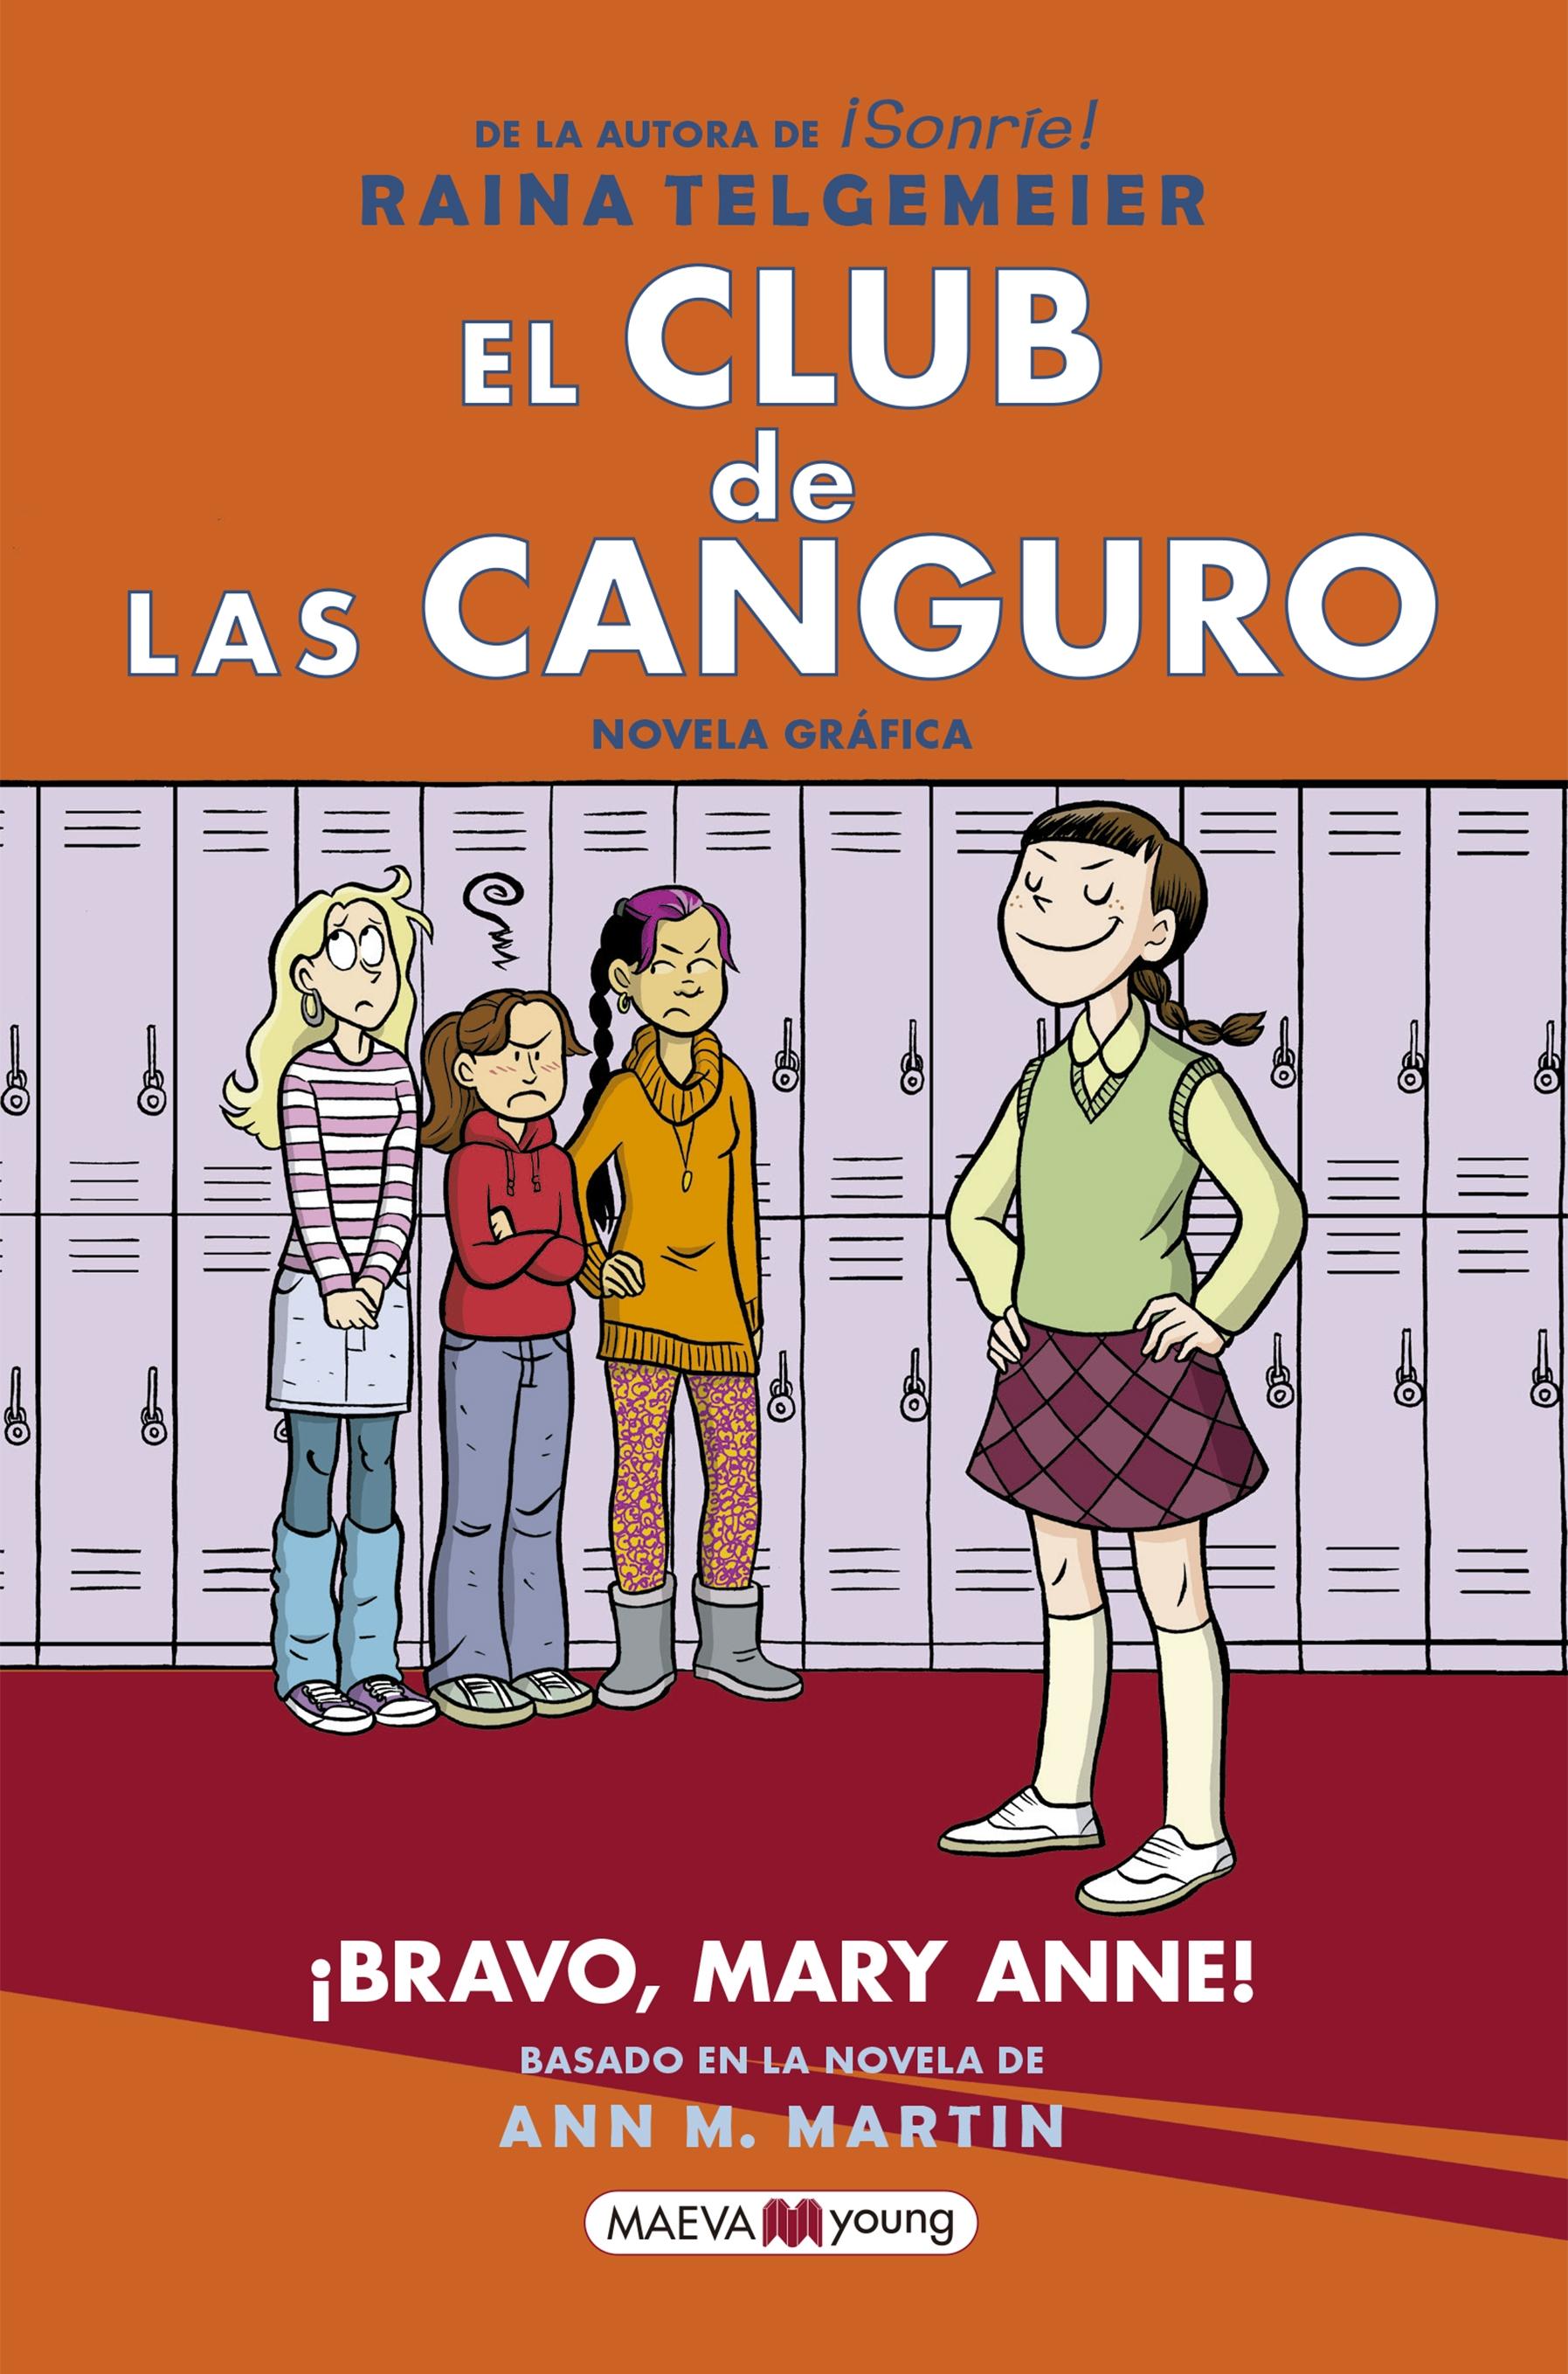 Bravo, Mary Anne! "El Club de las Canguro 3 - Novela gráfica"